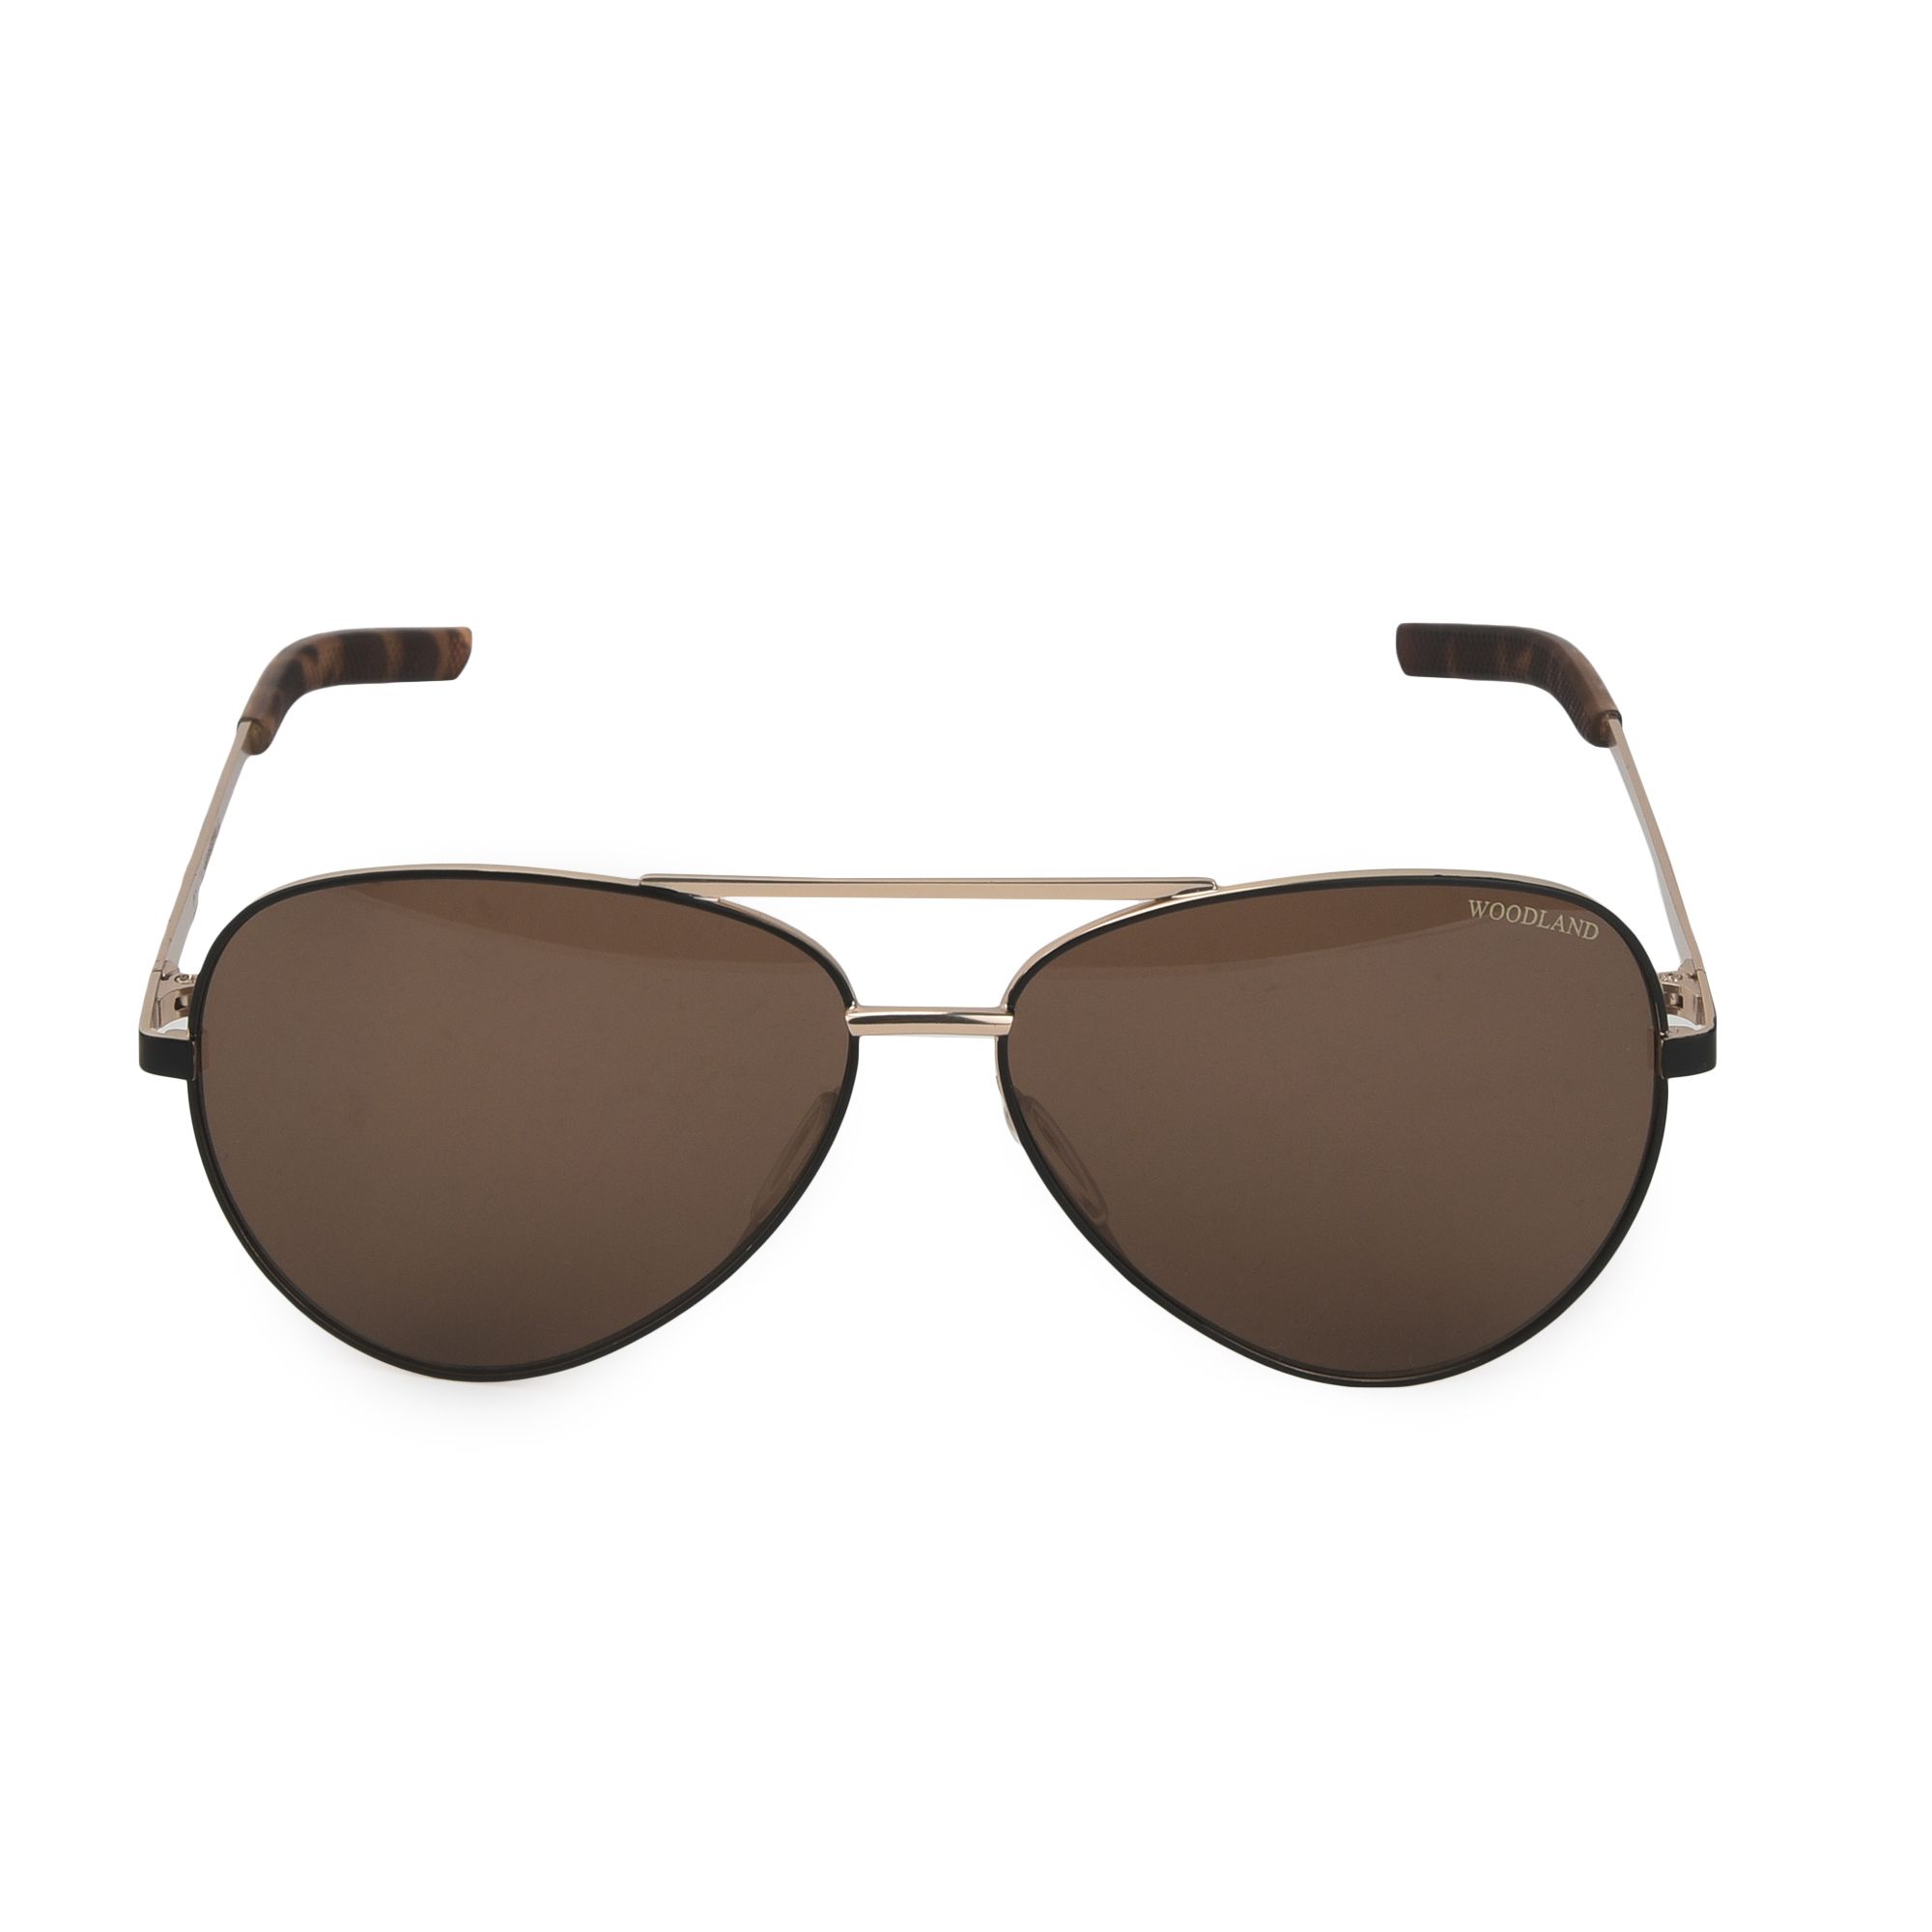  ATTCL Men's HD Polarized Navigator Aviator Sunglasses for  Men Driving Fishing Golf T005 Gold-Brown: Sunglasses 